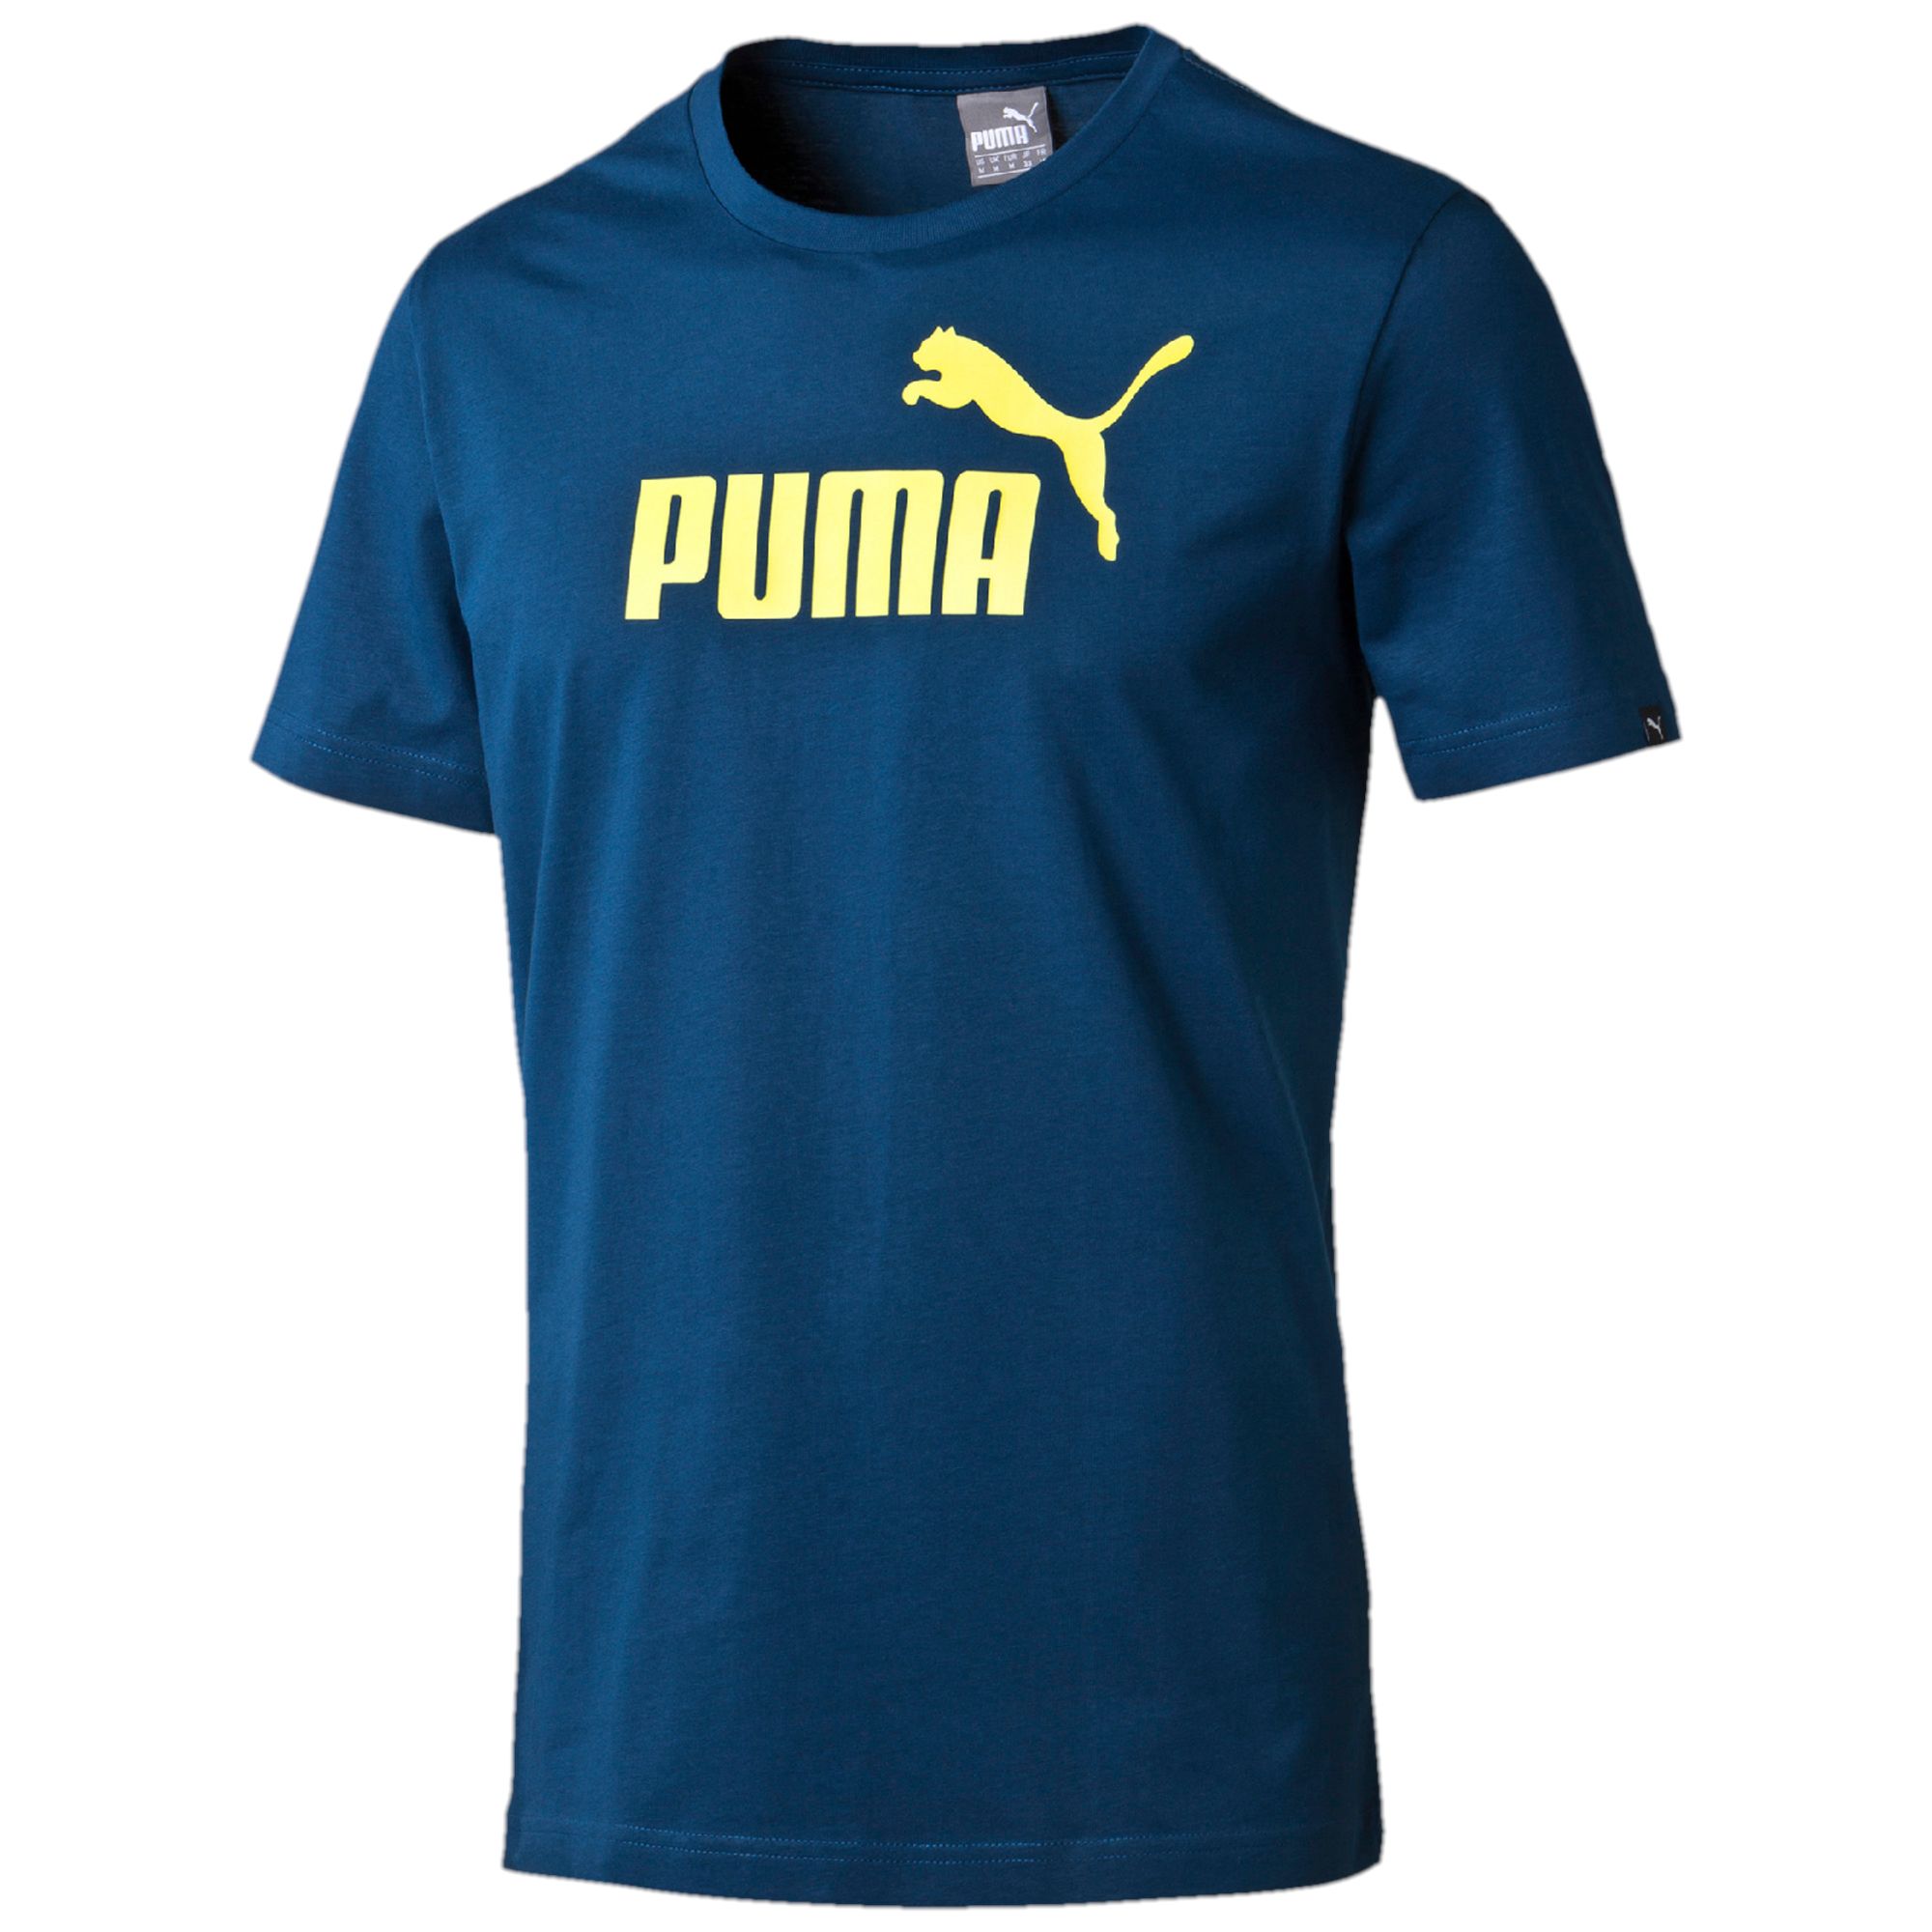  ESS No.1 Logo Tee - Puma  <br> ESS No.1 Logo Tee   ESS No.1 Logo Tee,  ,      .      .        .   PUMA,      , ,        .: - 2015 : 100%  ,                    <br><br>color: <br>size US: L<br>gender: Male